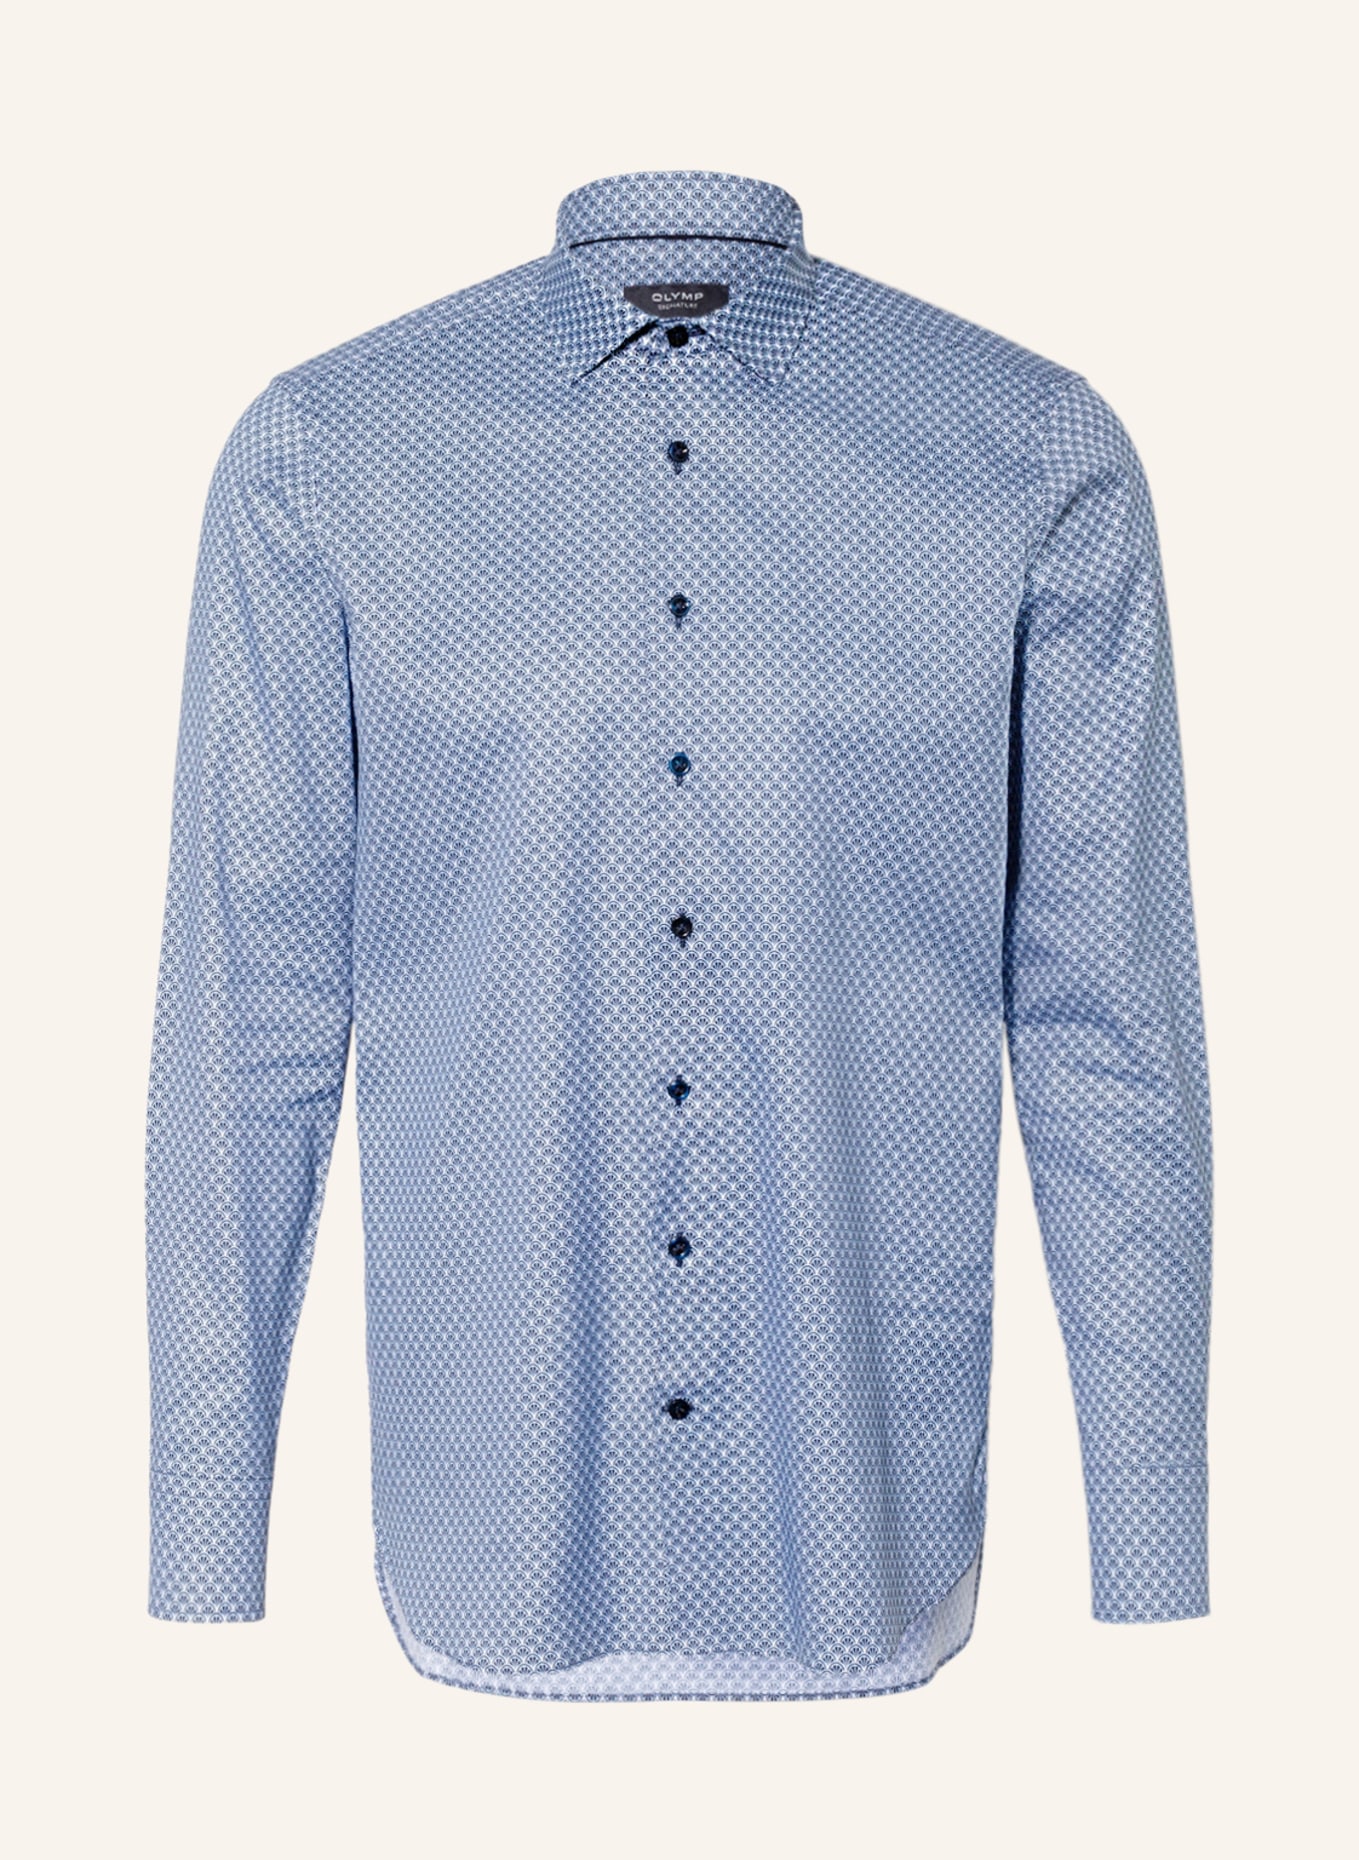 OLYMP SIGNATURE Hemd in fit blau/ dunkelblau tailored